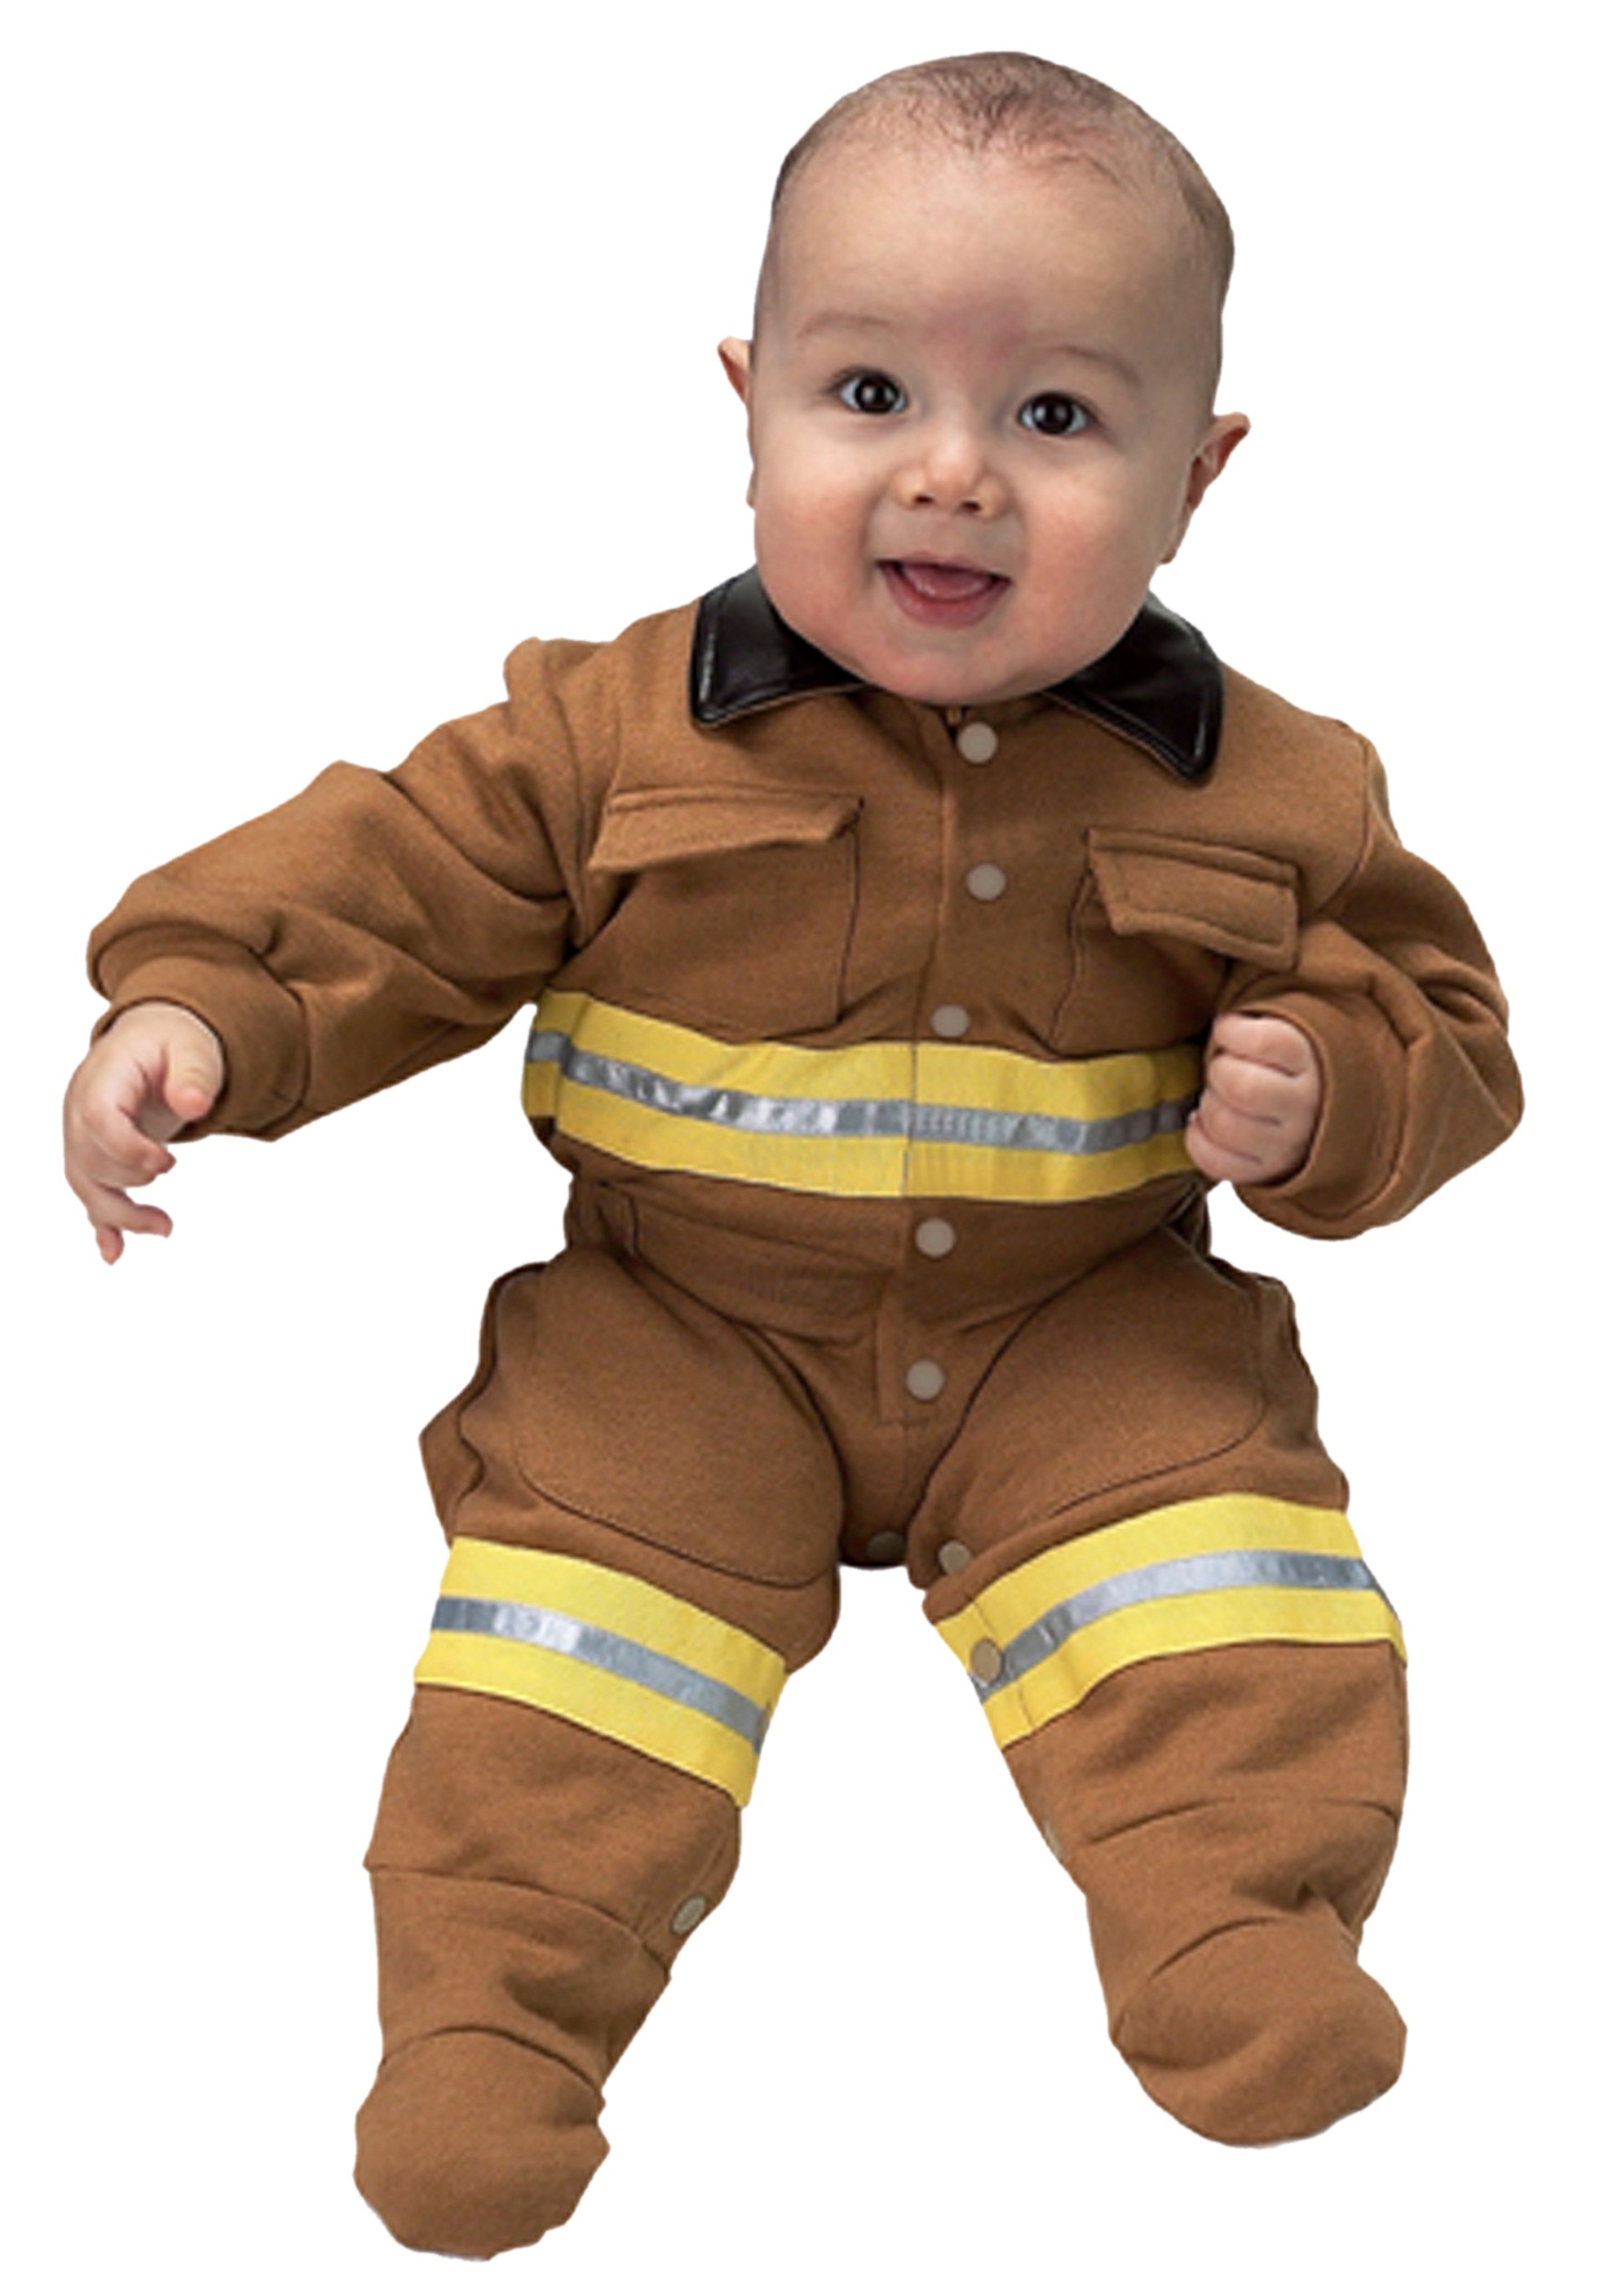 Firefighter Onesie Infant Costume